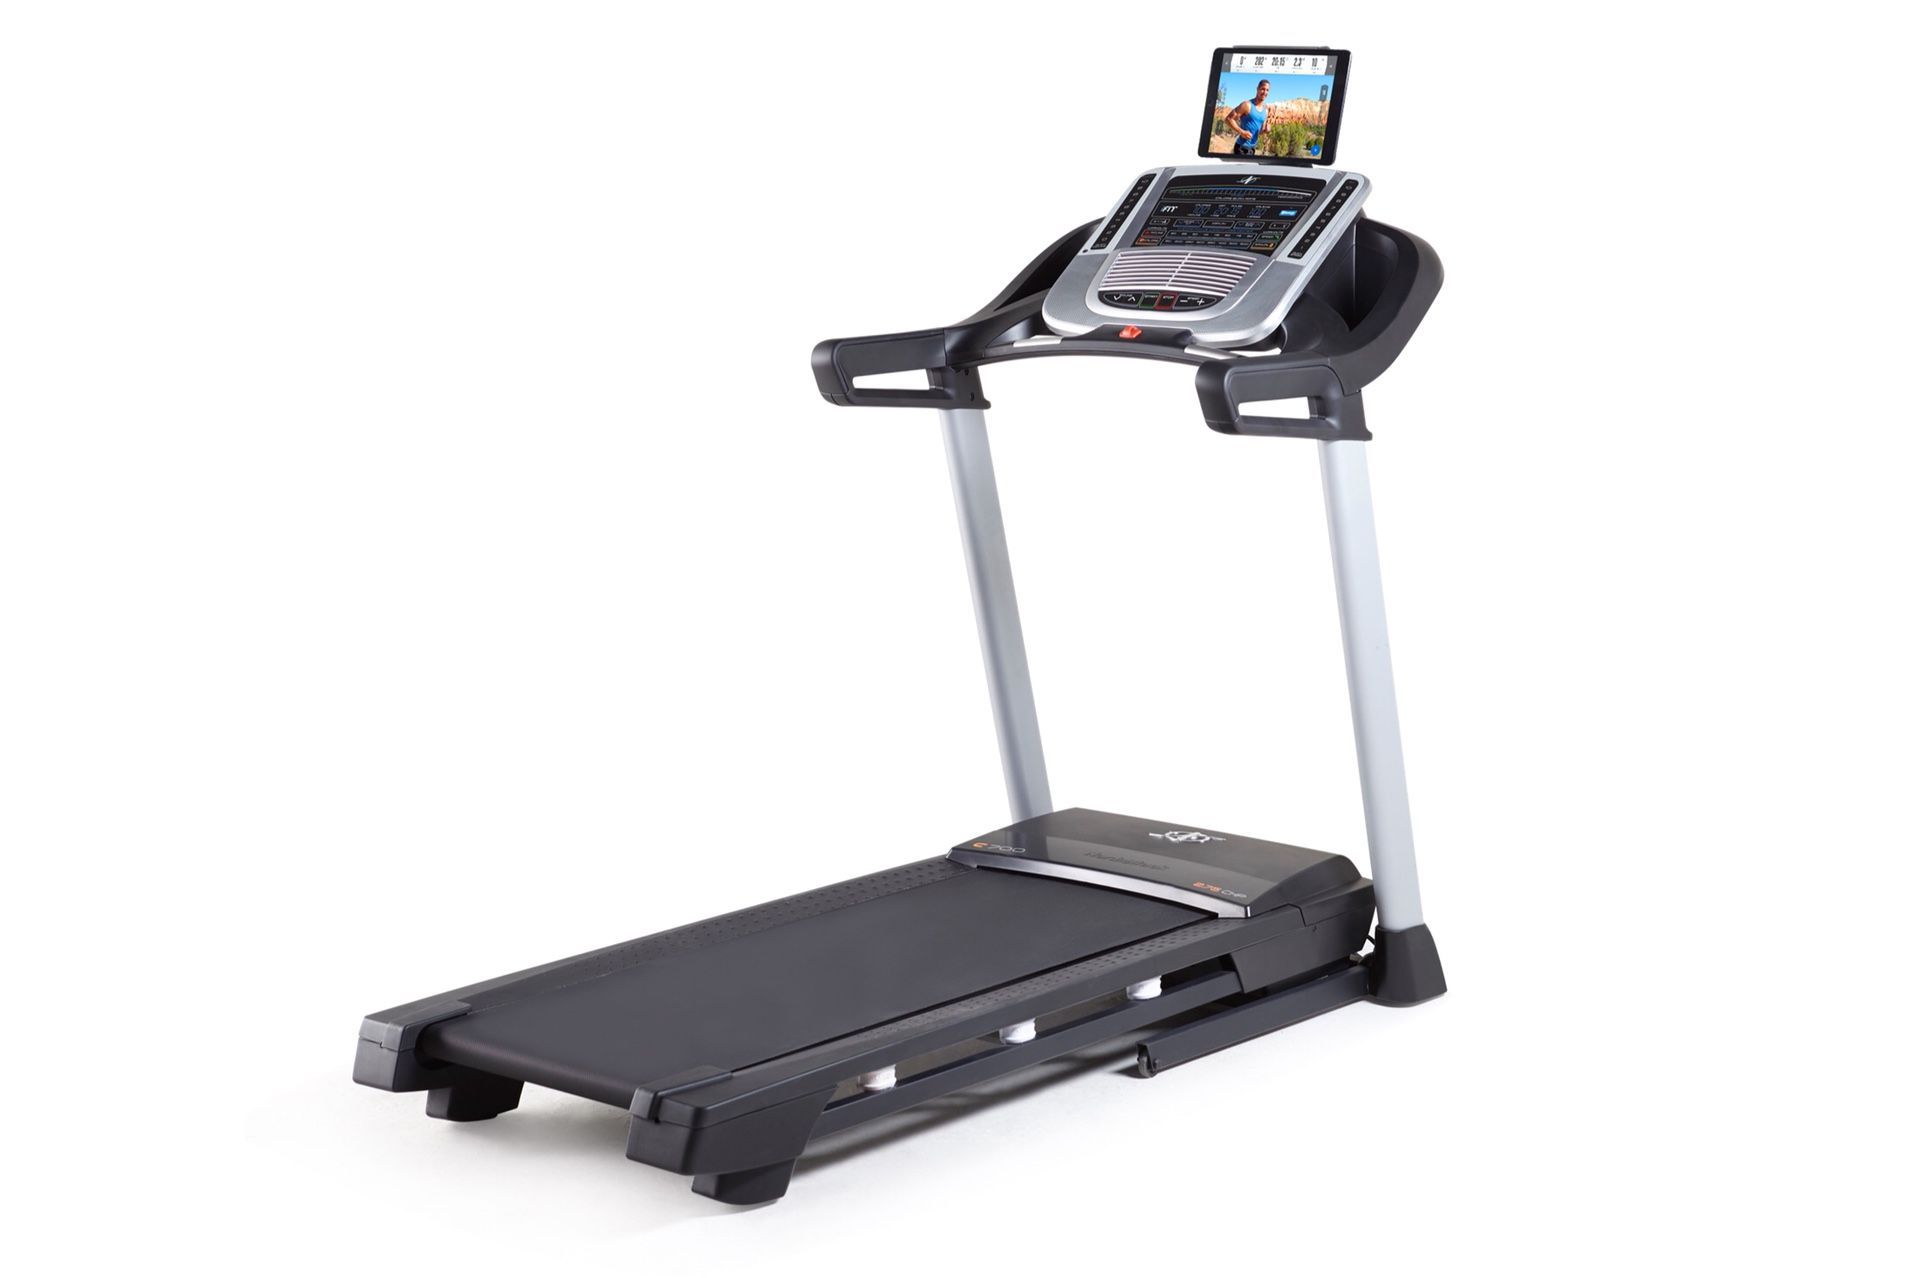 New nordictrack treadmill no hardware $200